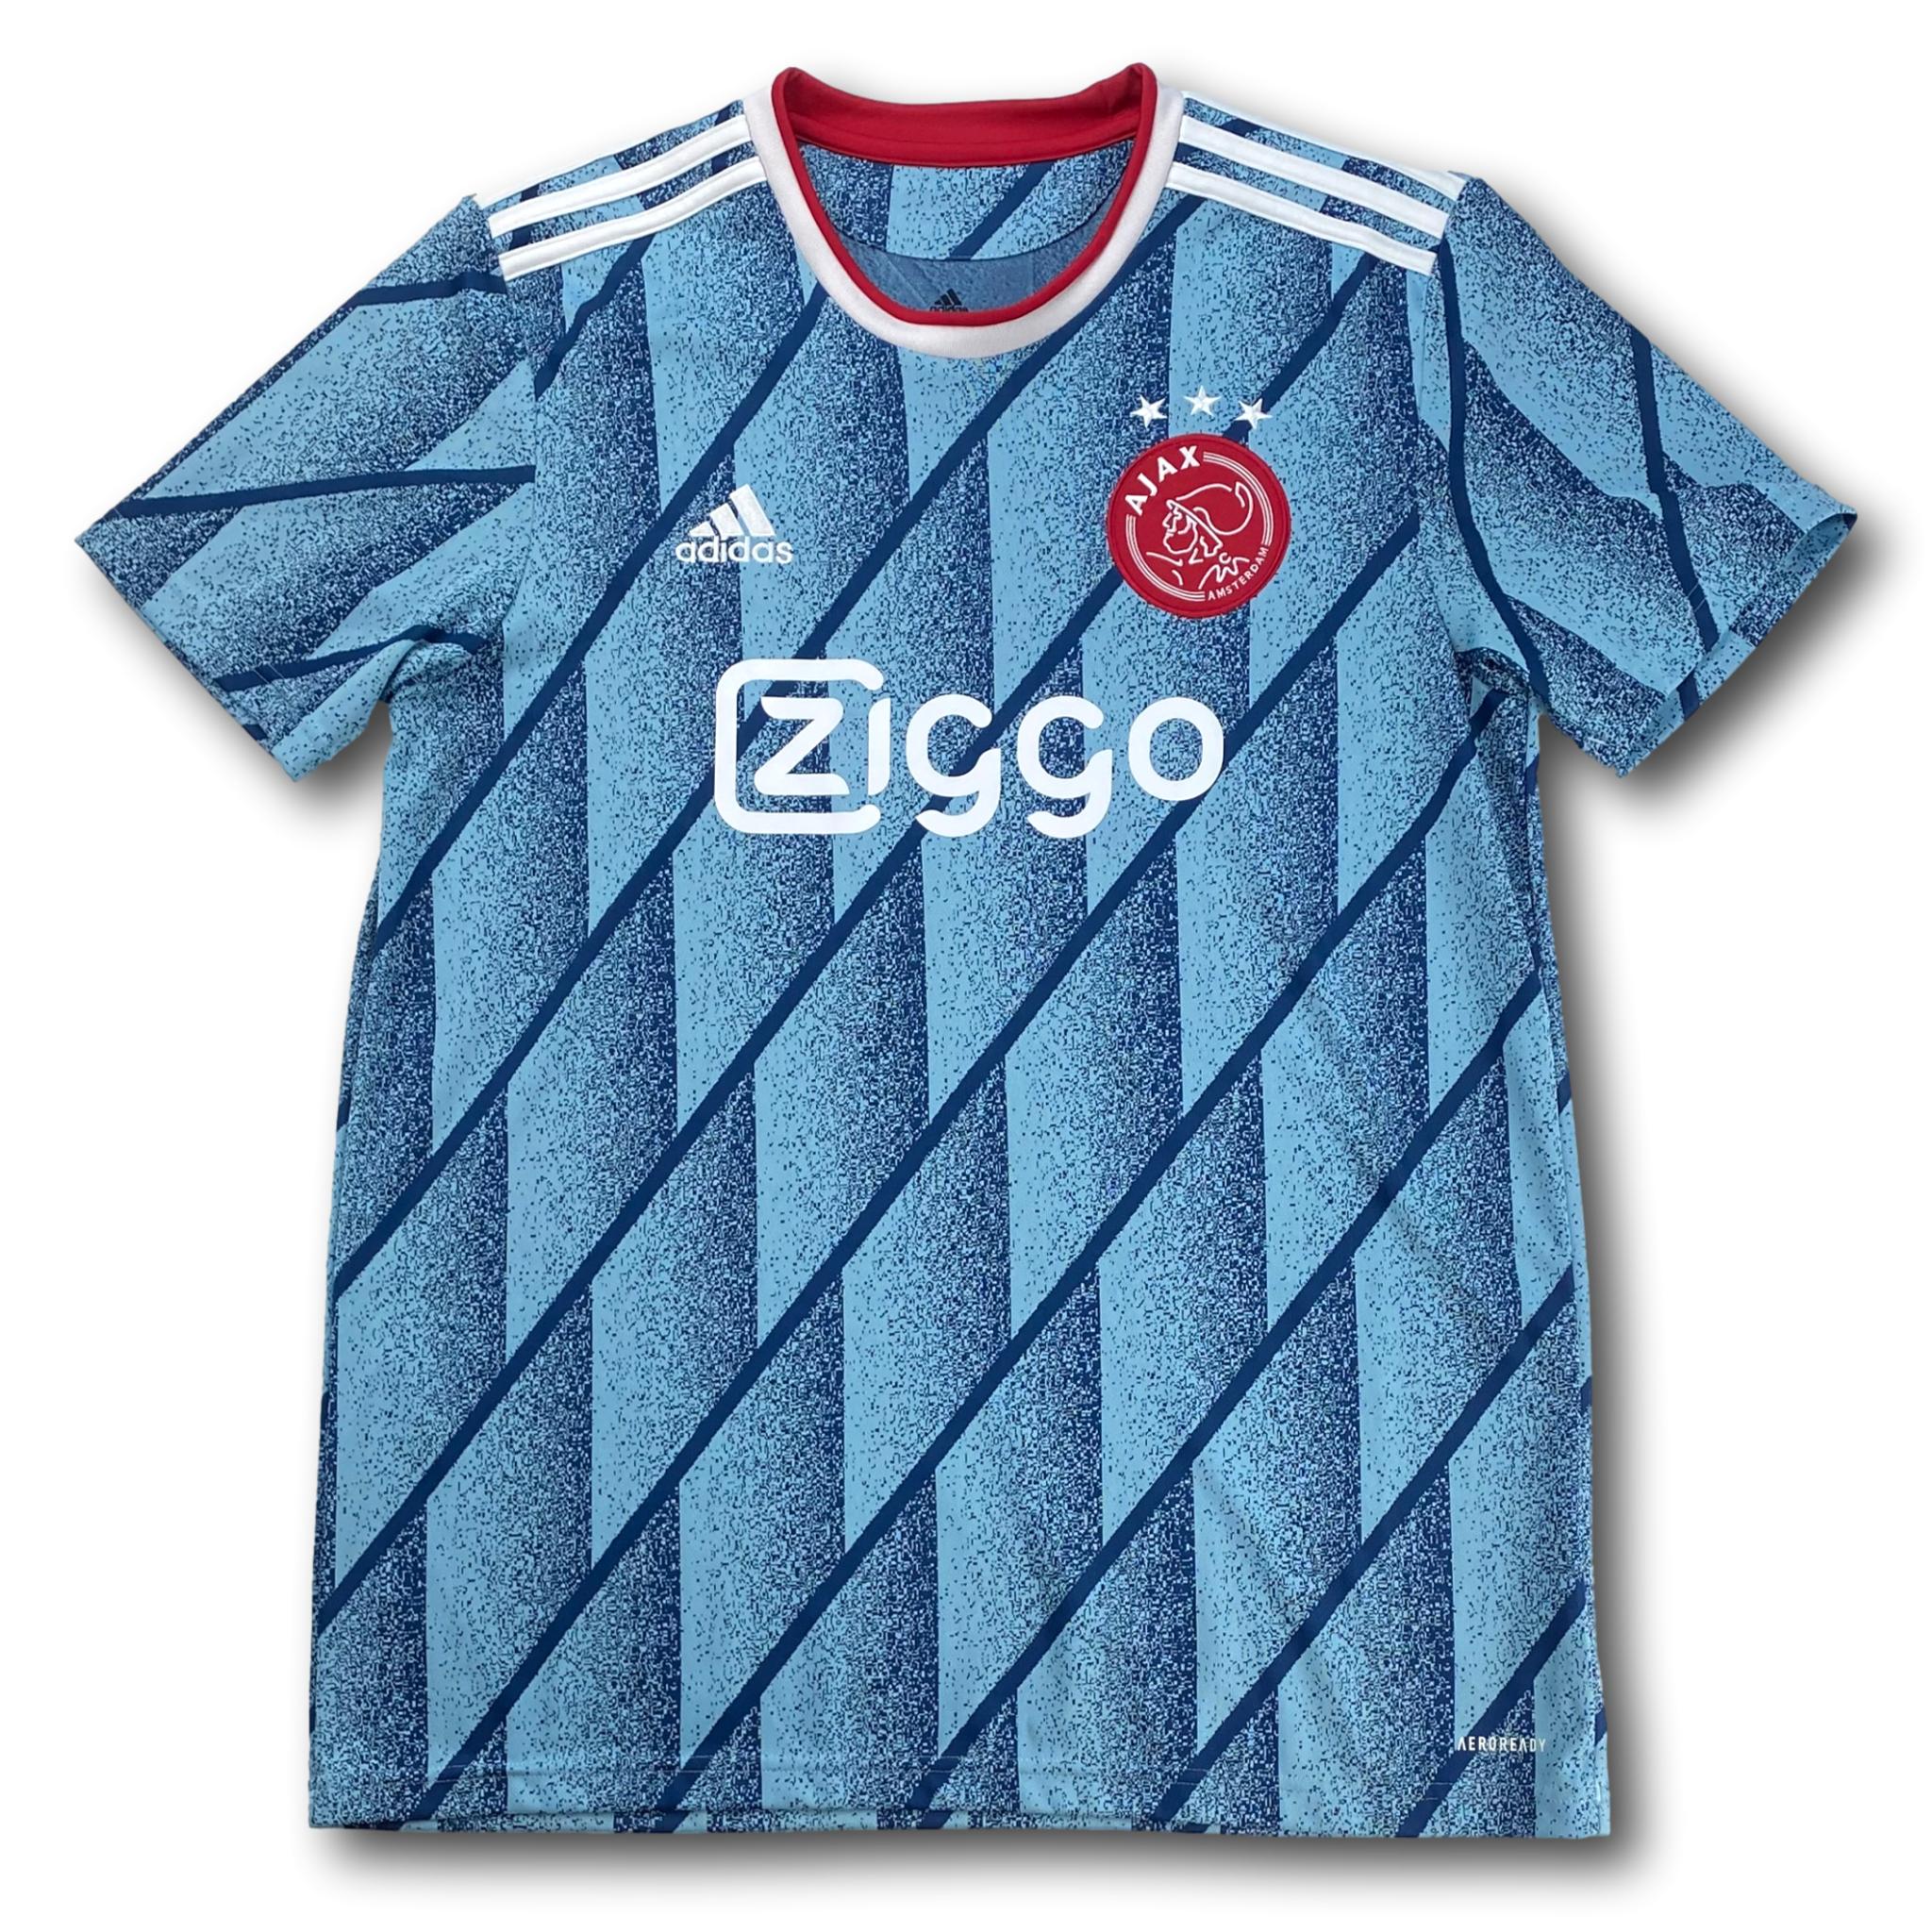 Ajax Amsterdam 2020-21 Auswärts L adidas